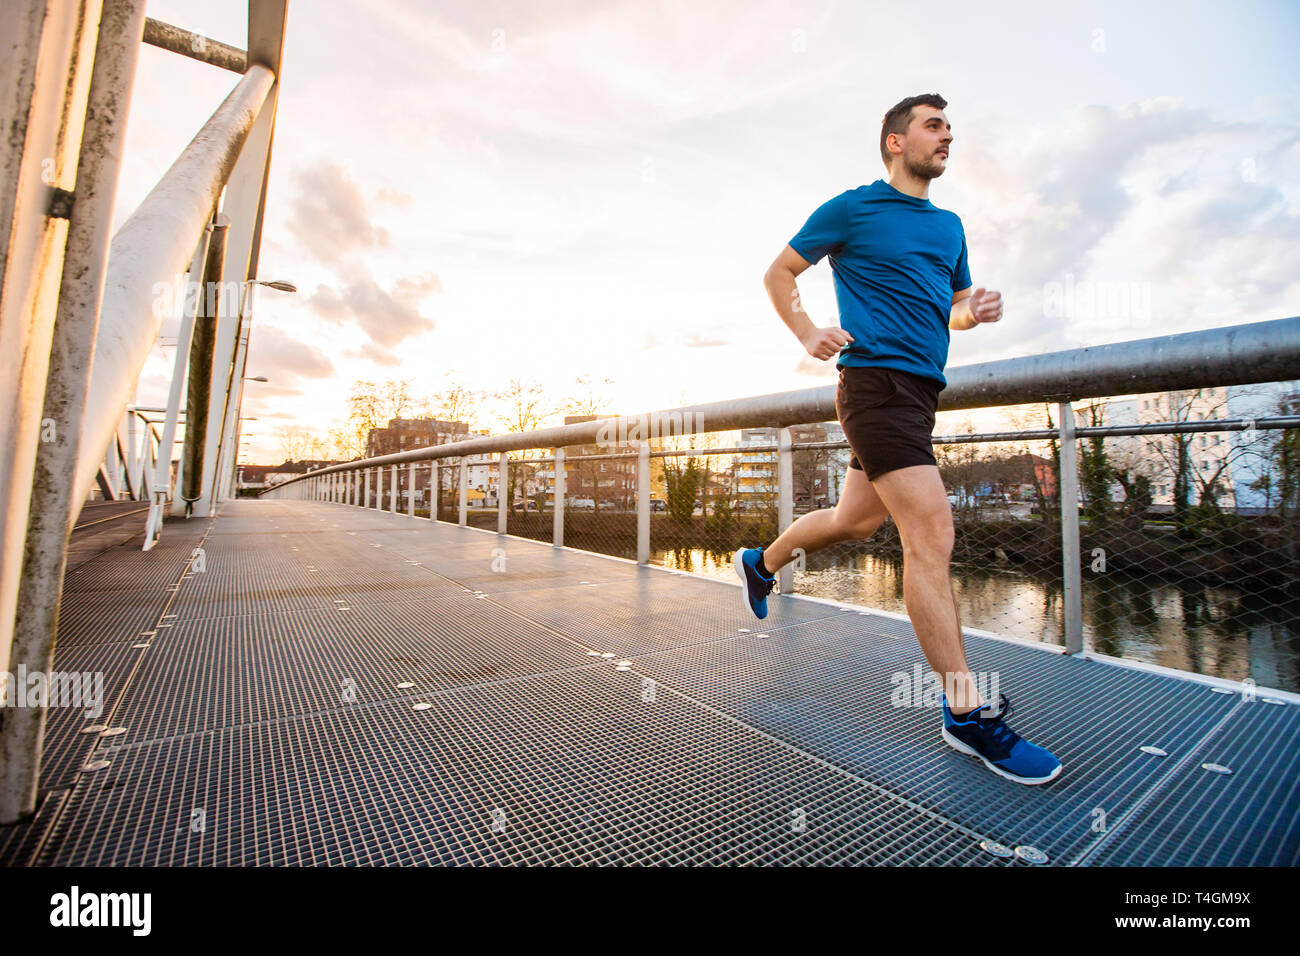 Running man runner training doing outdoor city run sprinting over a bridge. Urban healthy active lifestyle. Male athlete running over sunset backgroun Stock Photo